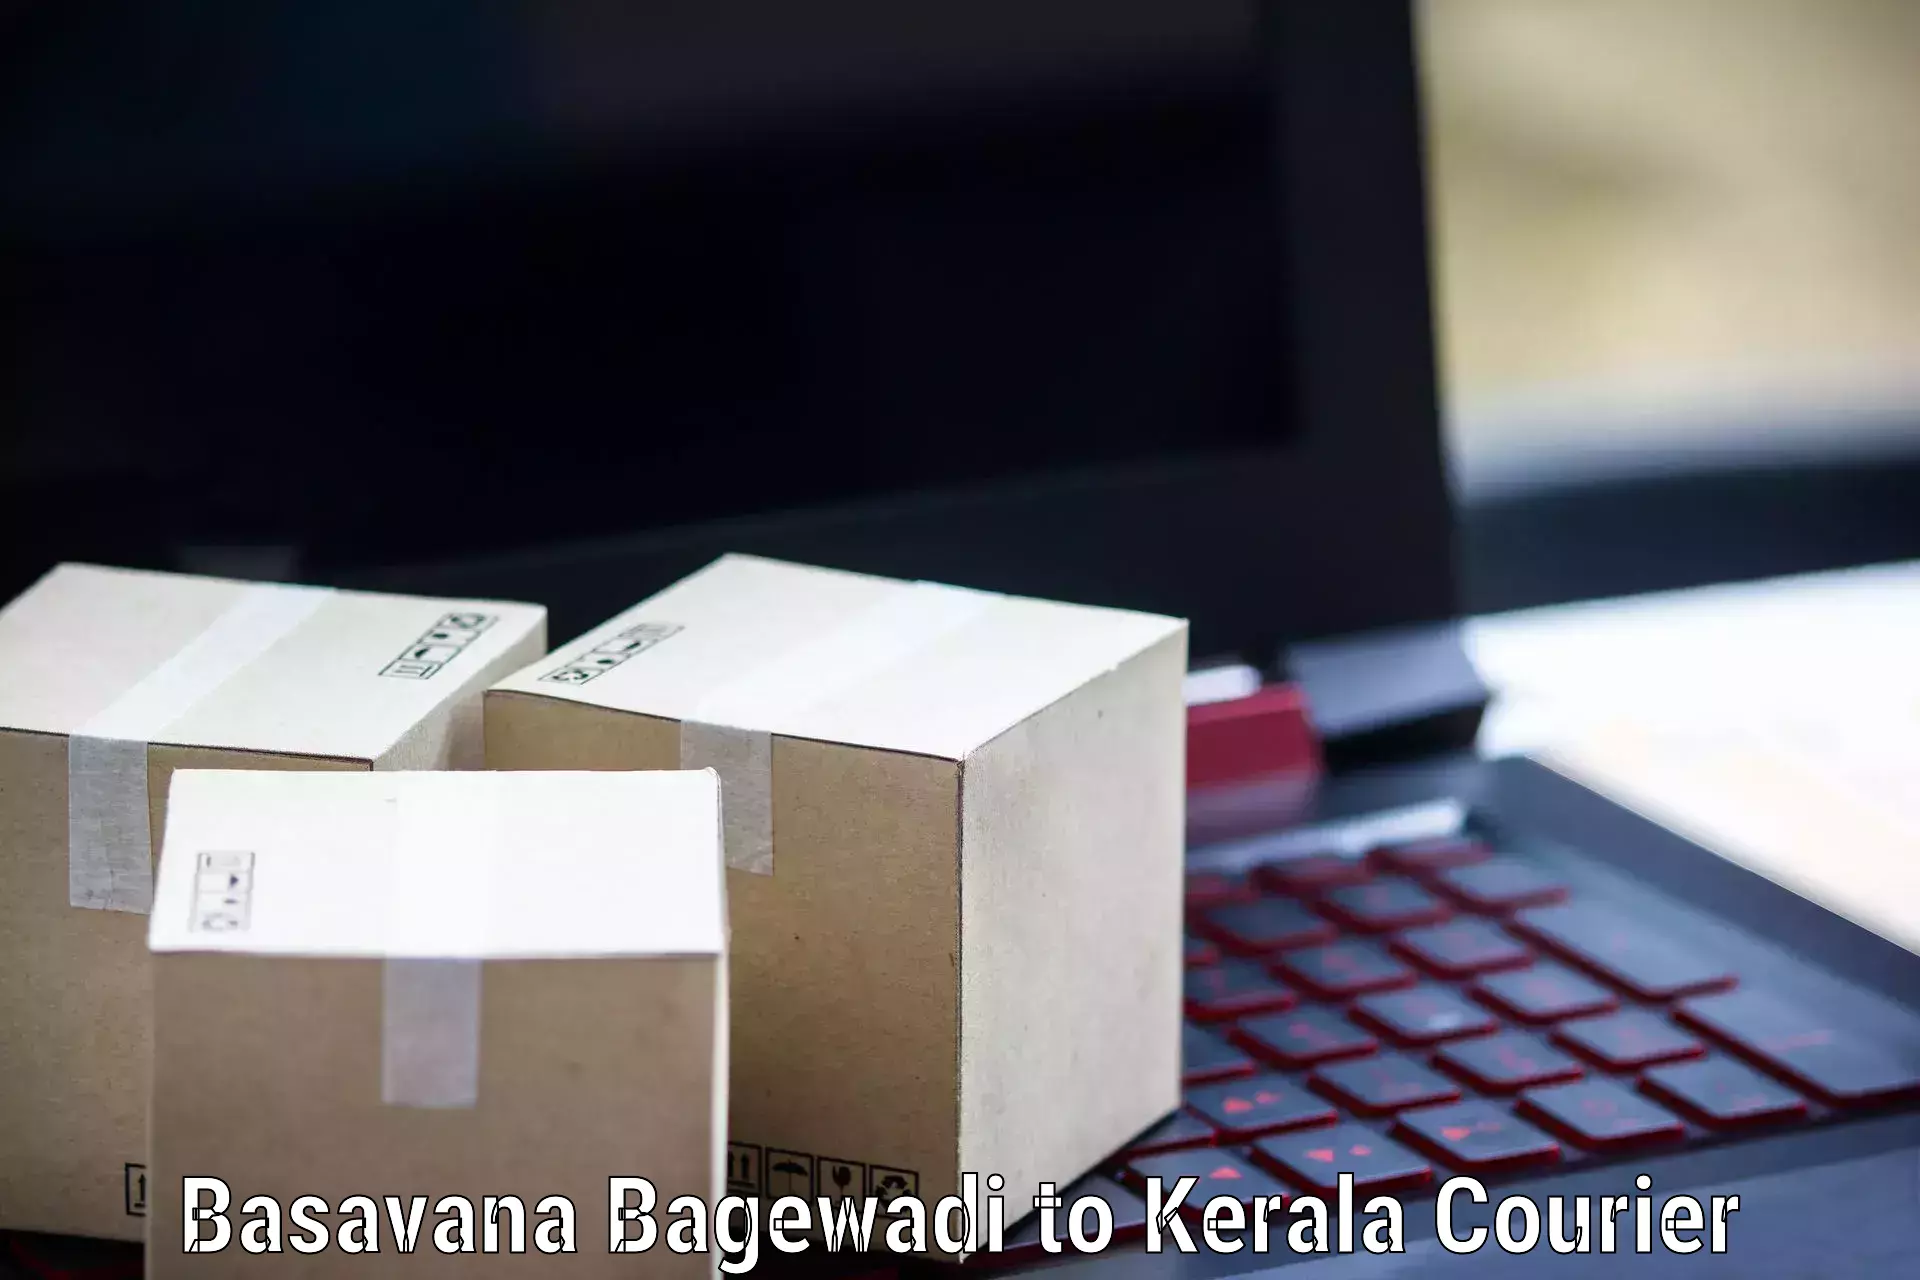 Express delivery capabilities Basavana Bagewadi to Calicut